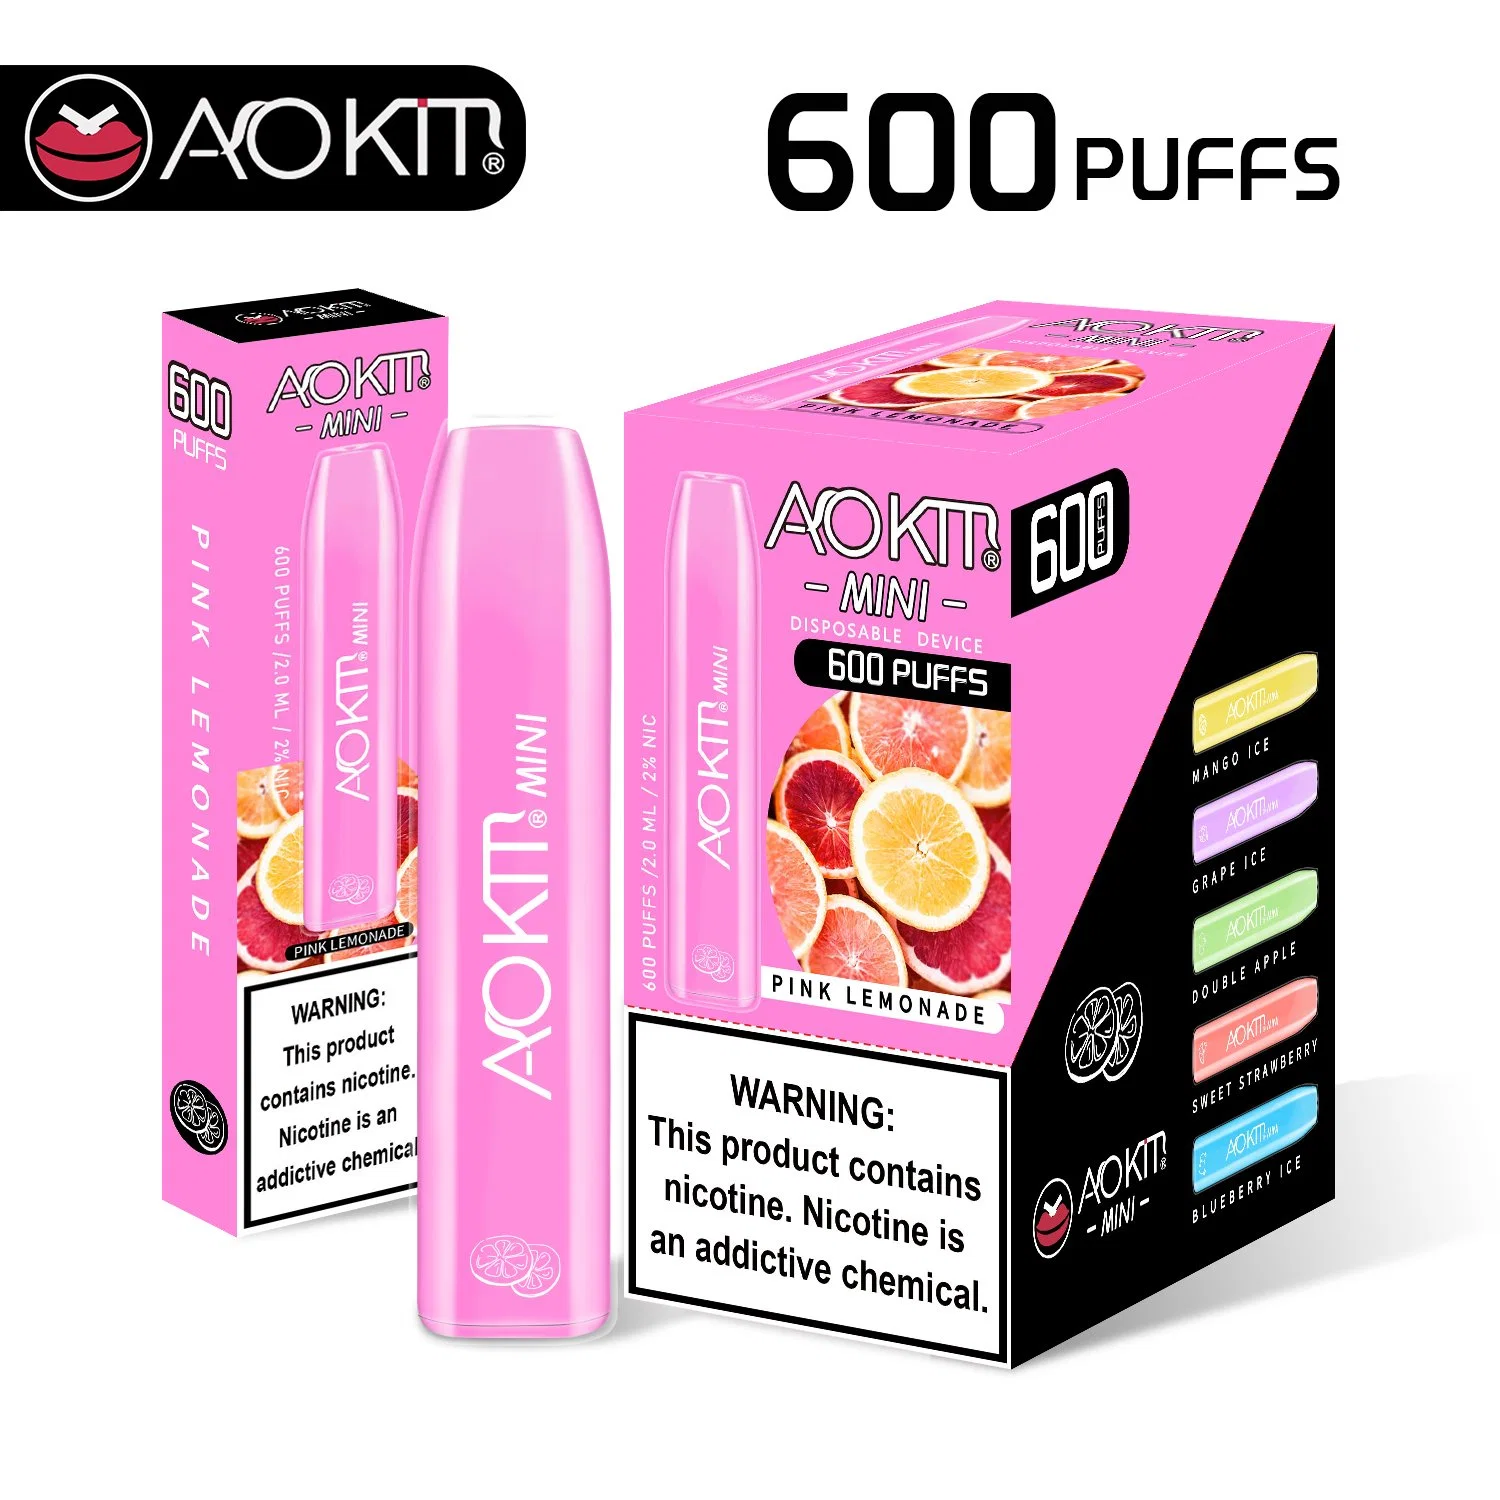 Small Puffs 2% Nicotine Smoking Vapes 12 Kinds Fruit Flavors Aokit Mini 600 Puffs E Cigarette